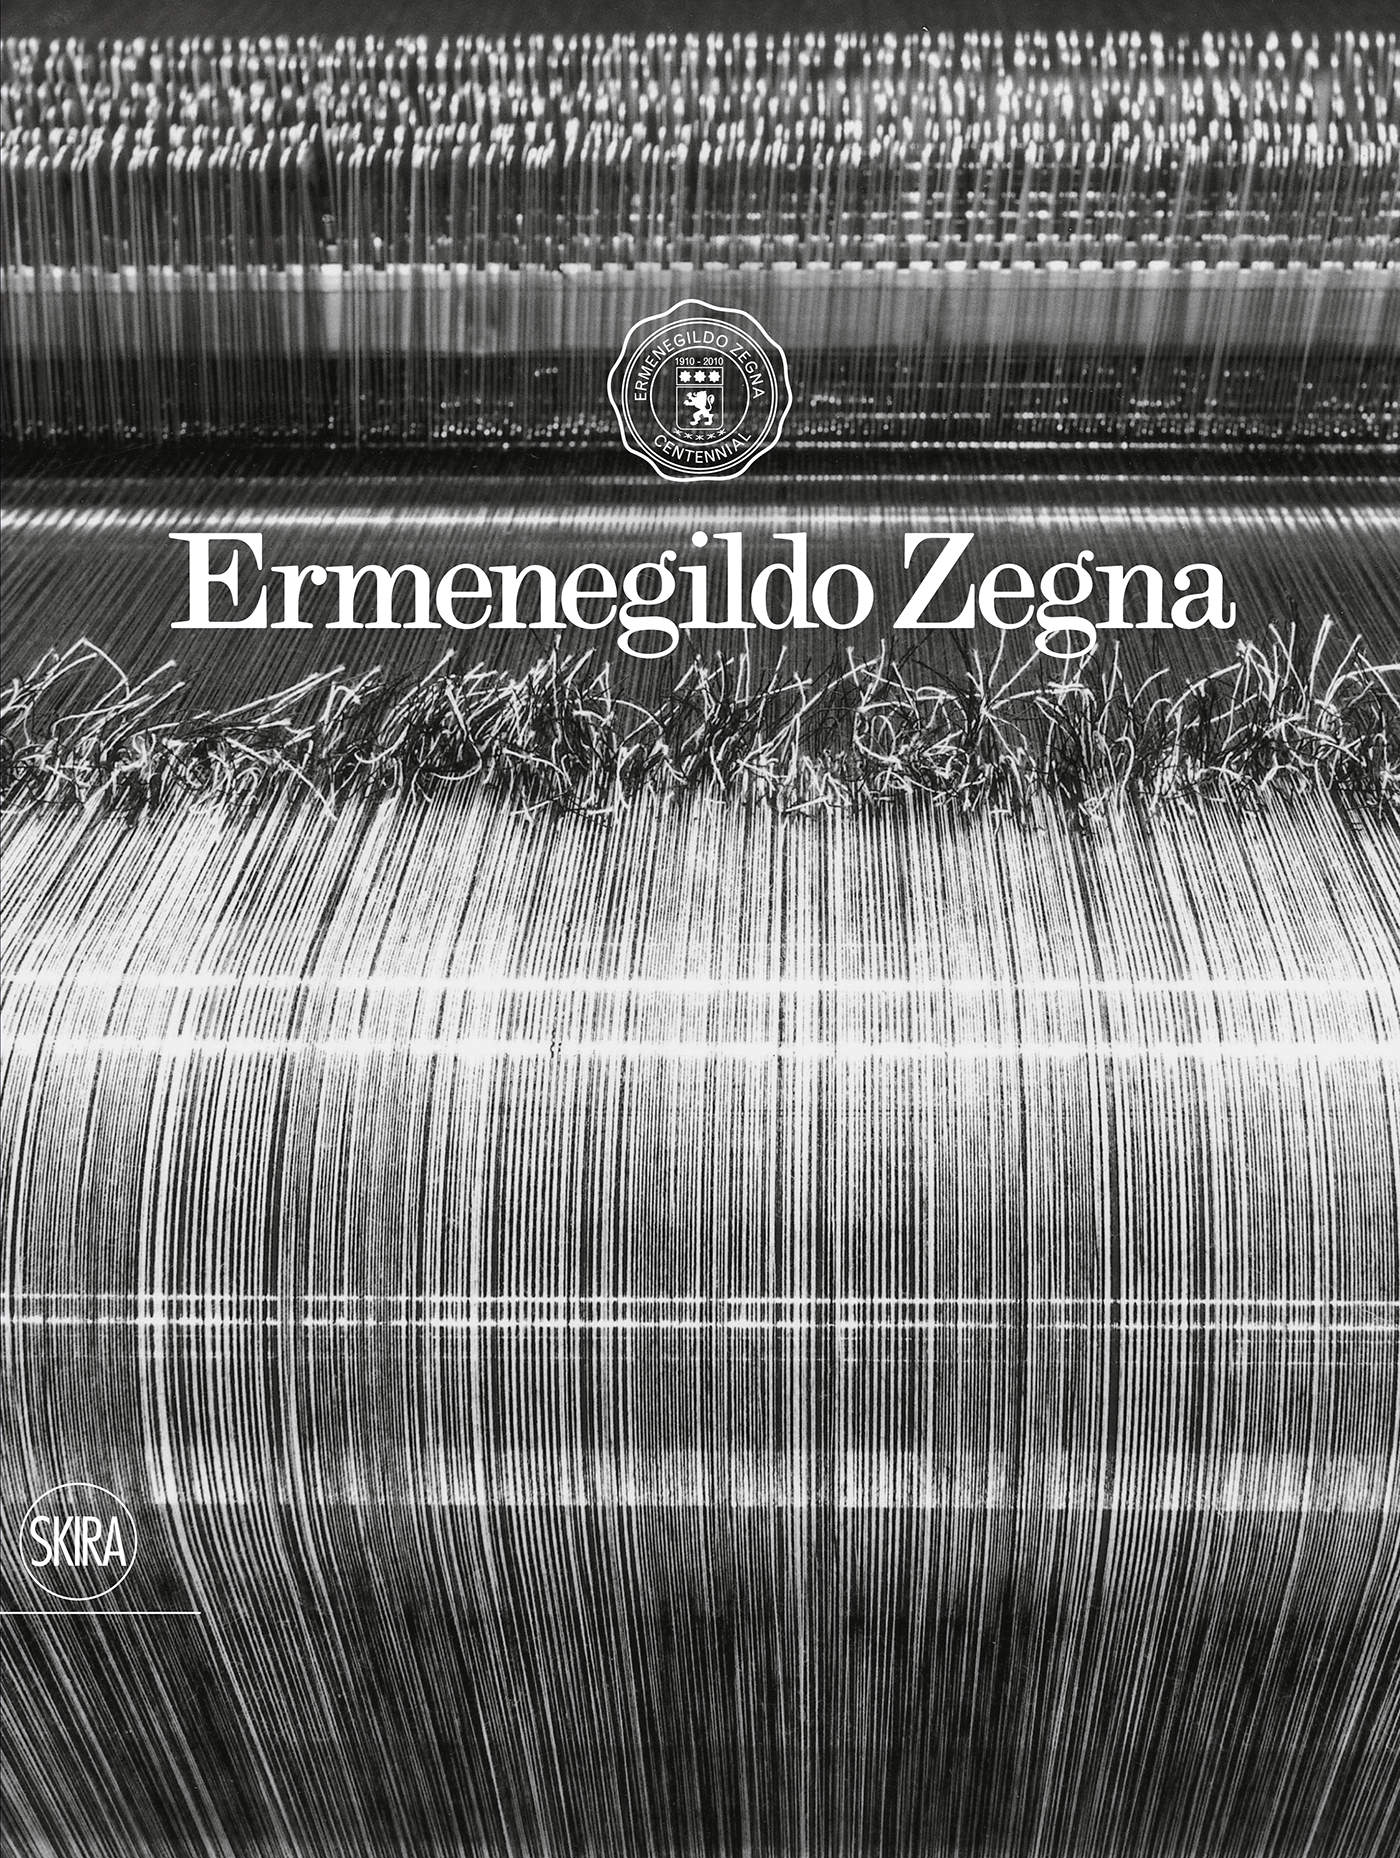 Ermenegildo Zegna: An Enduring Passion for Fabrics, Innovation, Quality, and Style